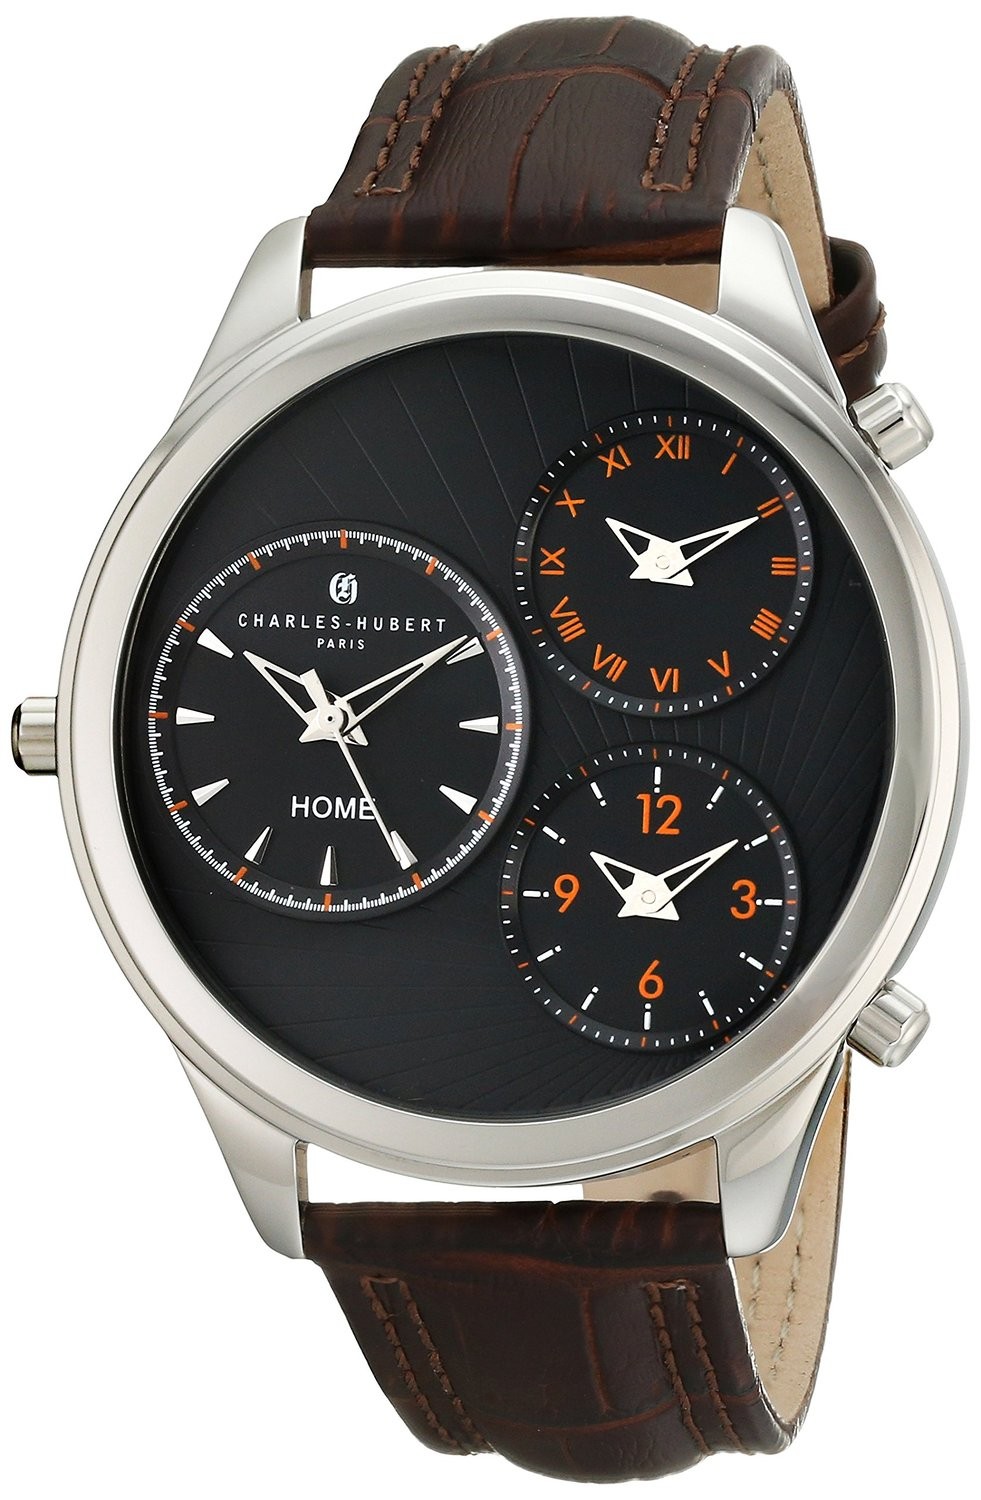 Charles-Hubert Paris Men's Stainless Steel Triple Time Quartz Watch